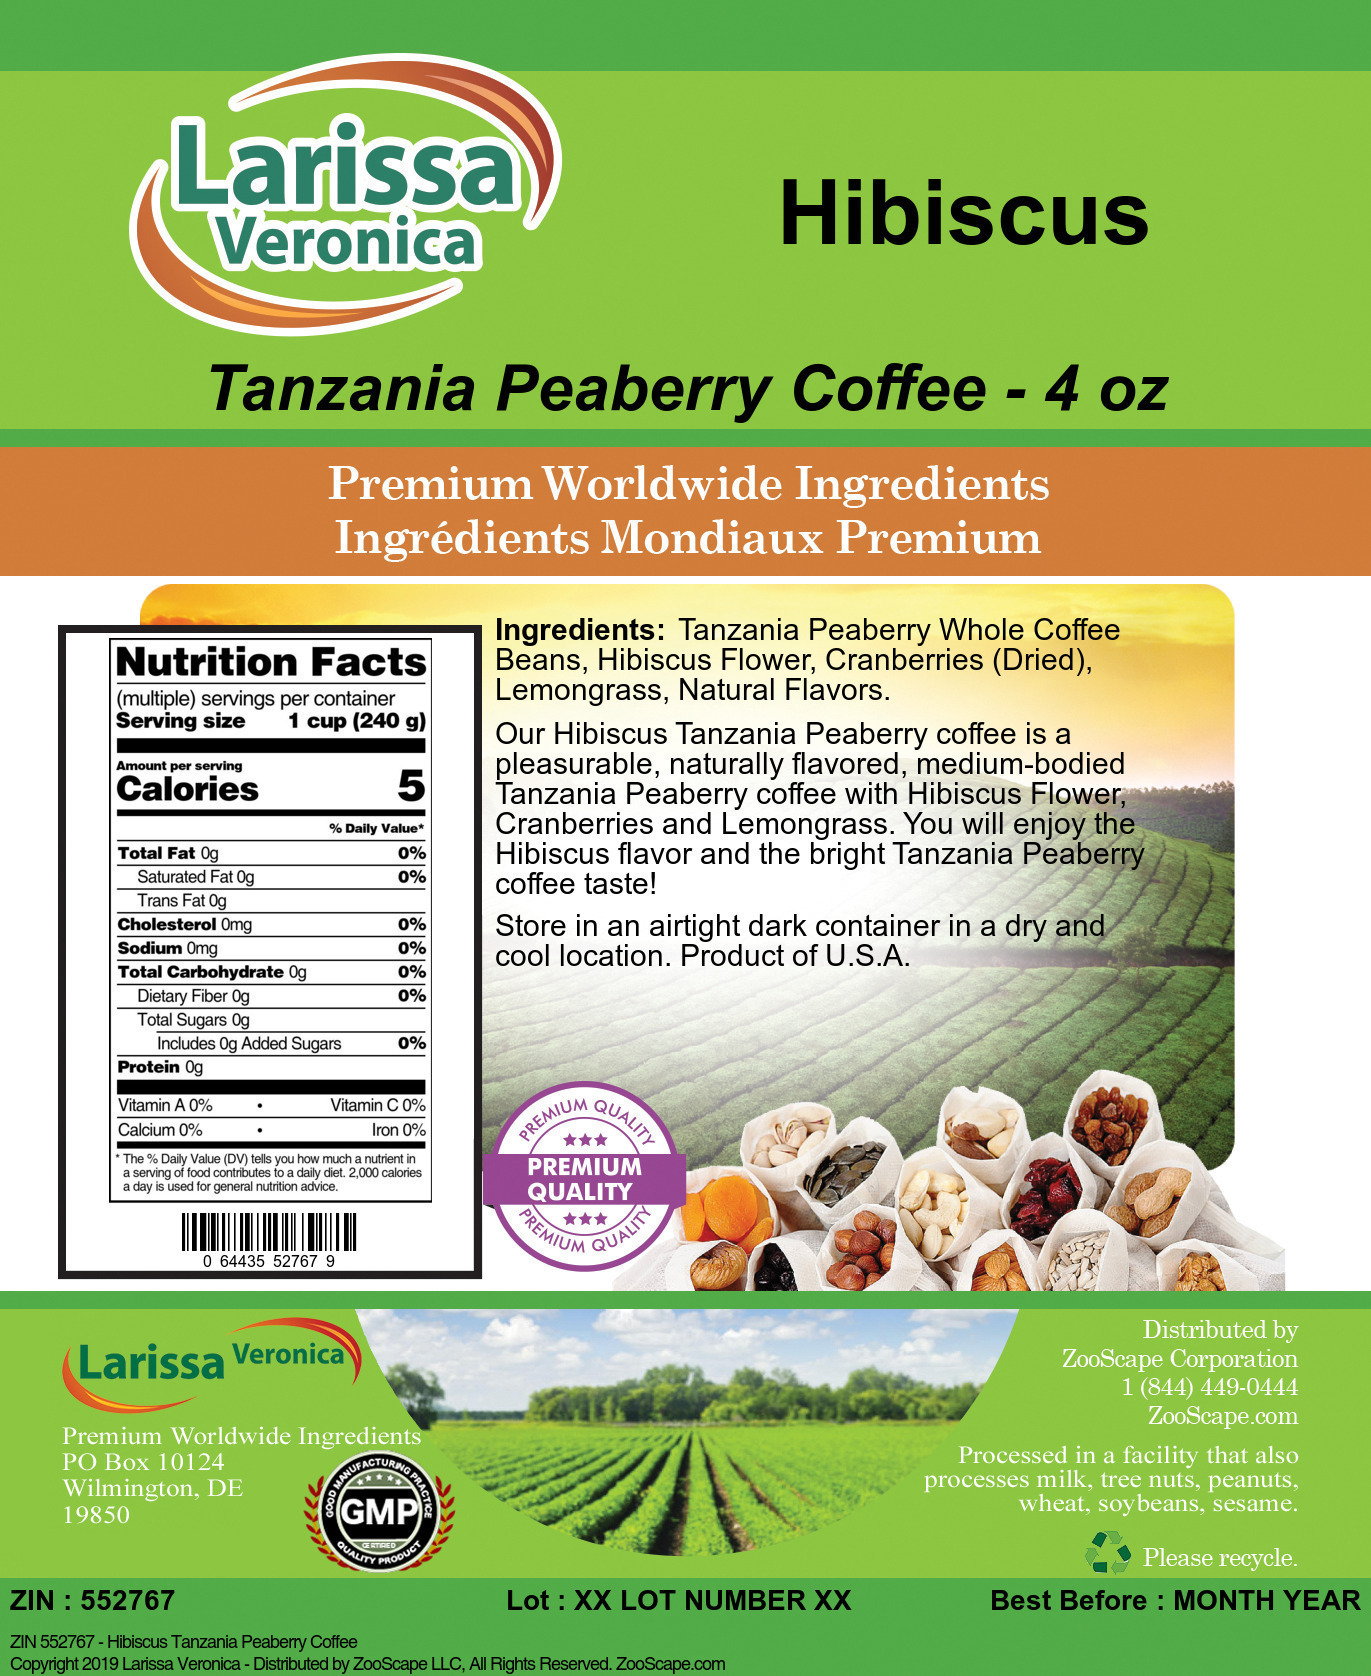 Hibiscus Tanzania Peaberry Coffee - Label